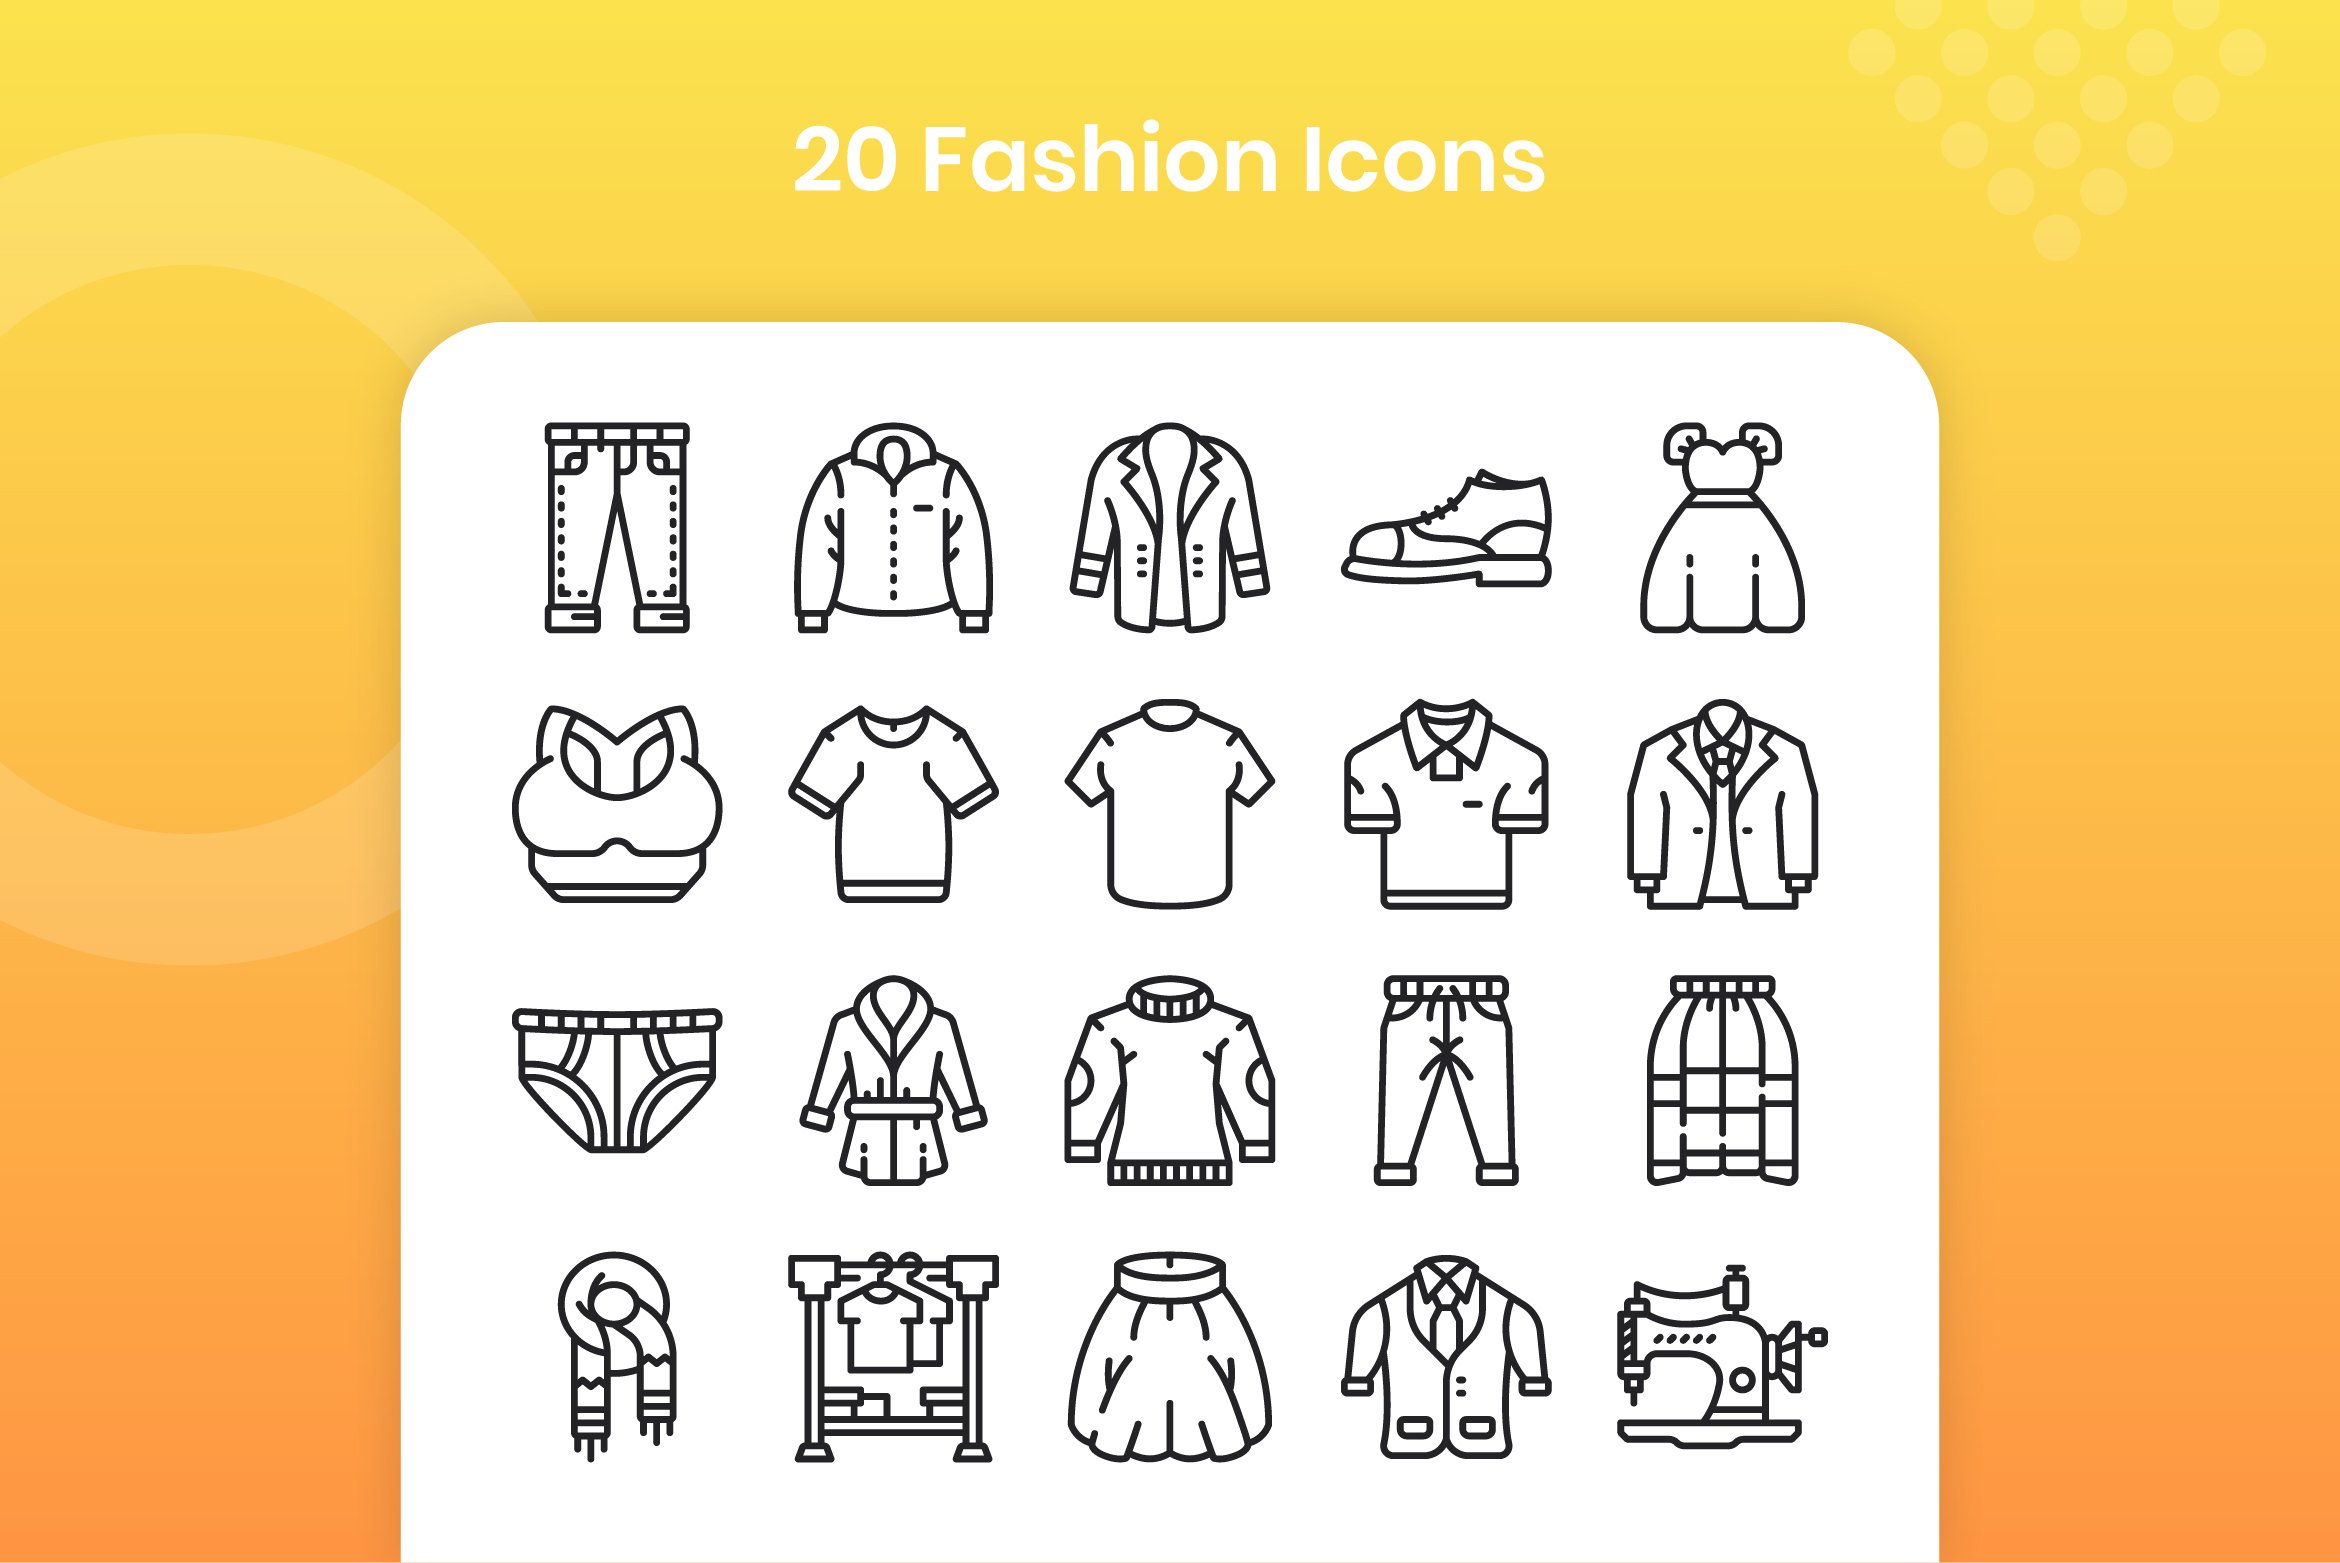 20 Fashion - Line preview image.